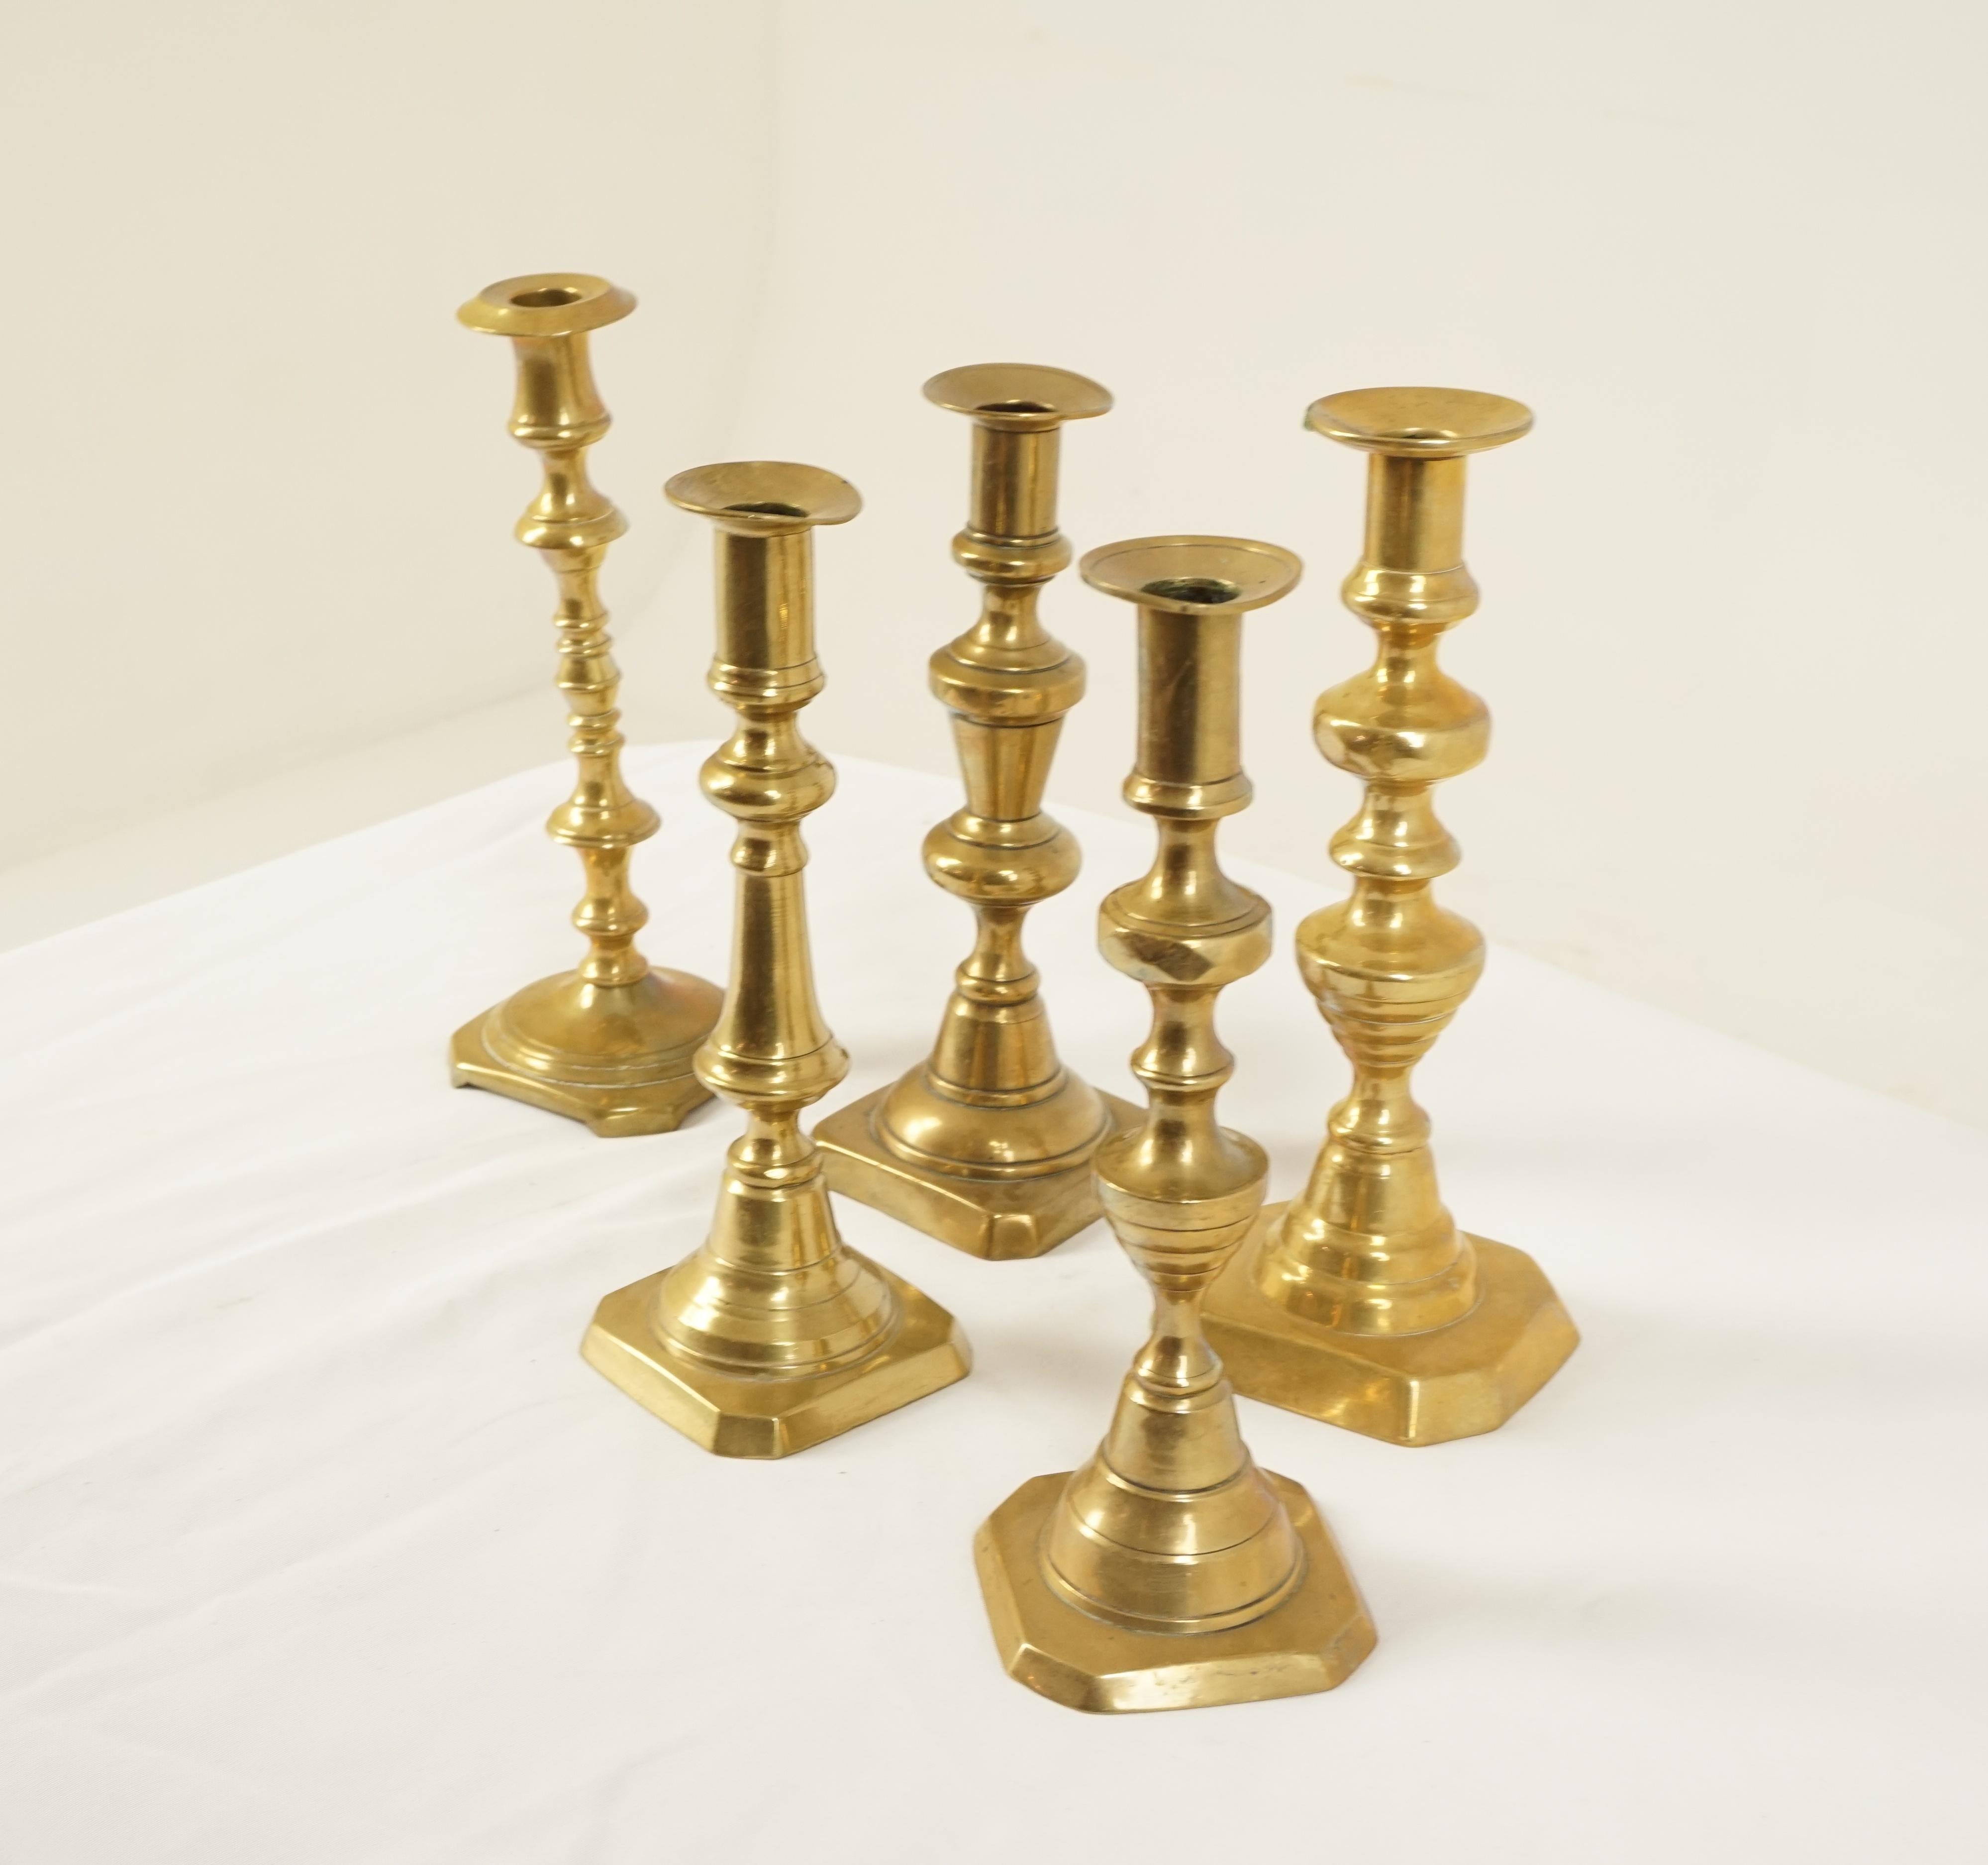 4 antique Victorian brass candlesticks, Scotland 1880, B88Y

Scotland 1880
Solid Brass
Good condition

Measures: 1 - 3.5